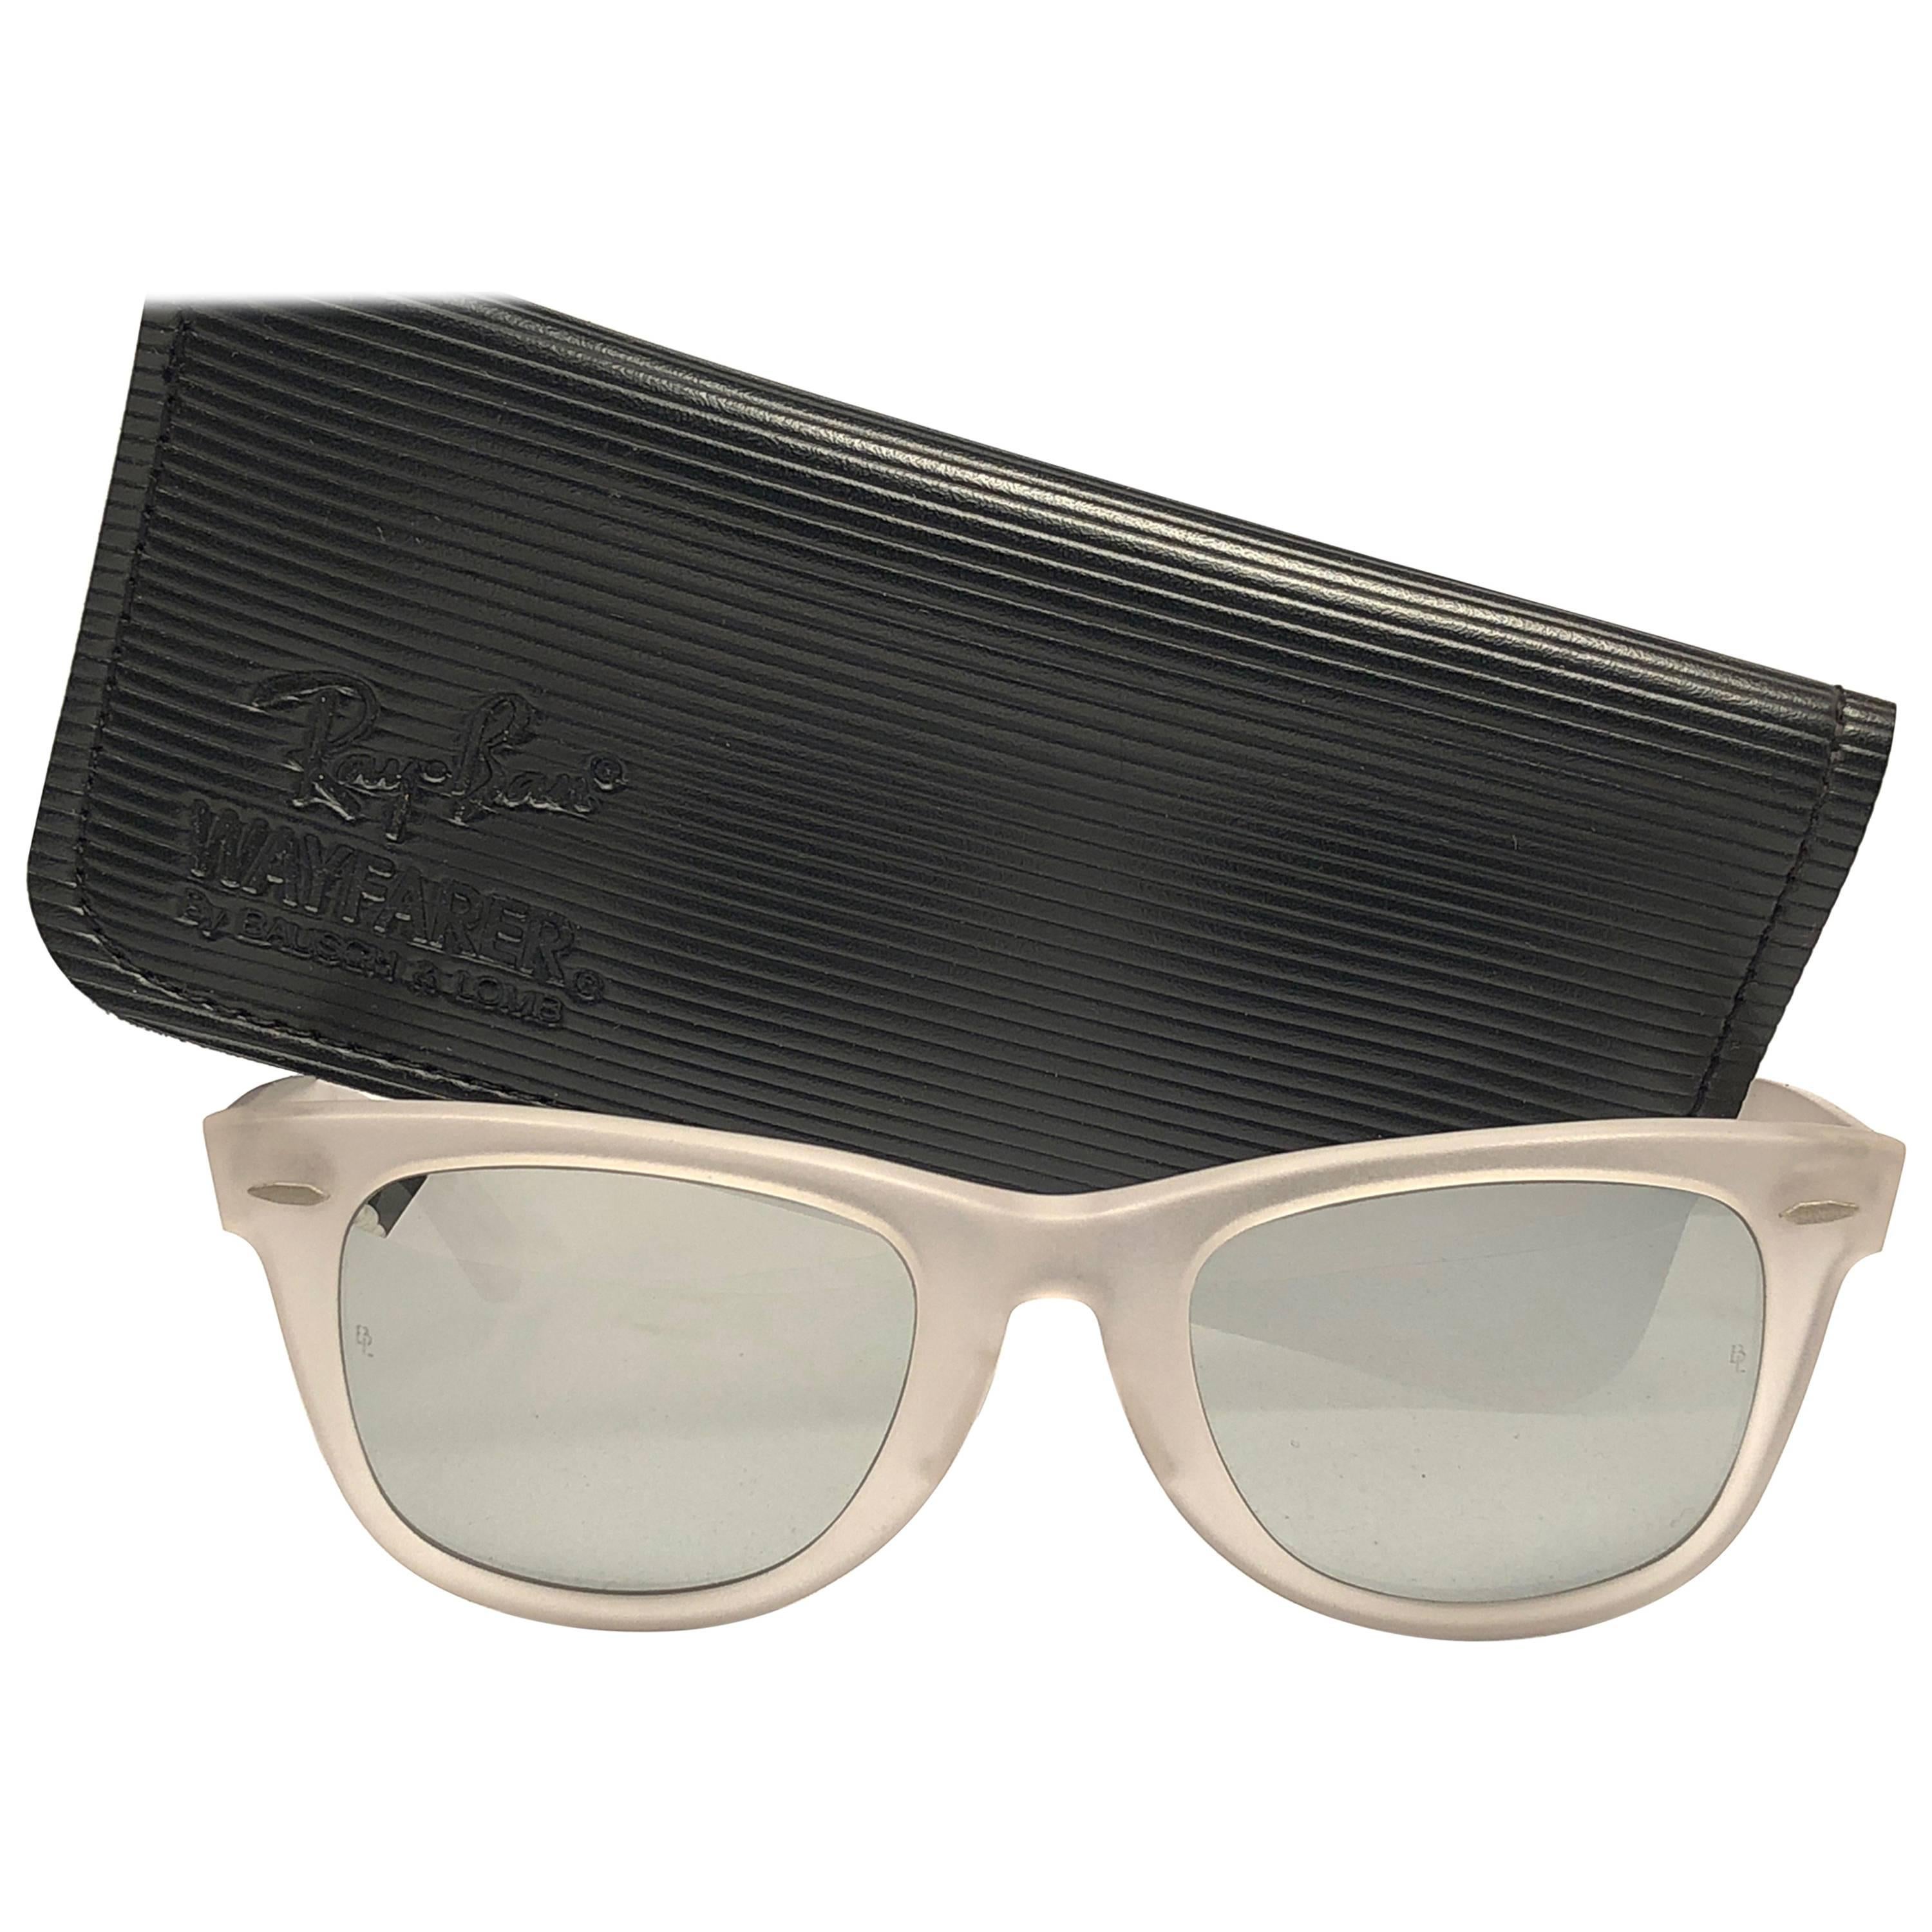 New Rare Ray Ban The Wayfarer Frosted B&L Full Mirror Lenses USA 80's Sunglasses